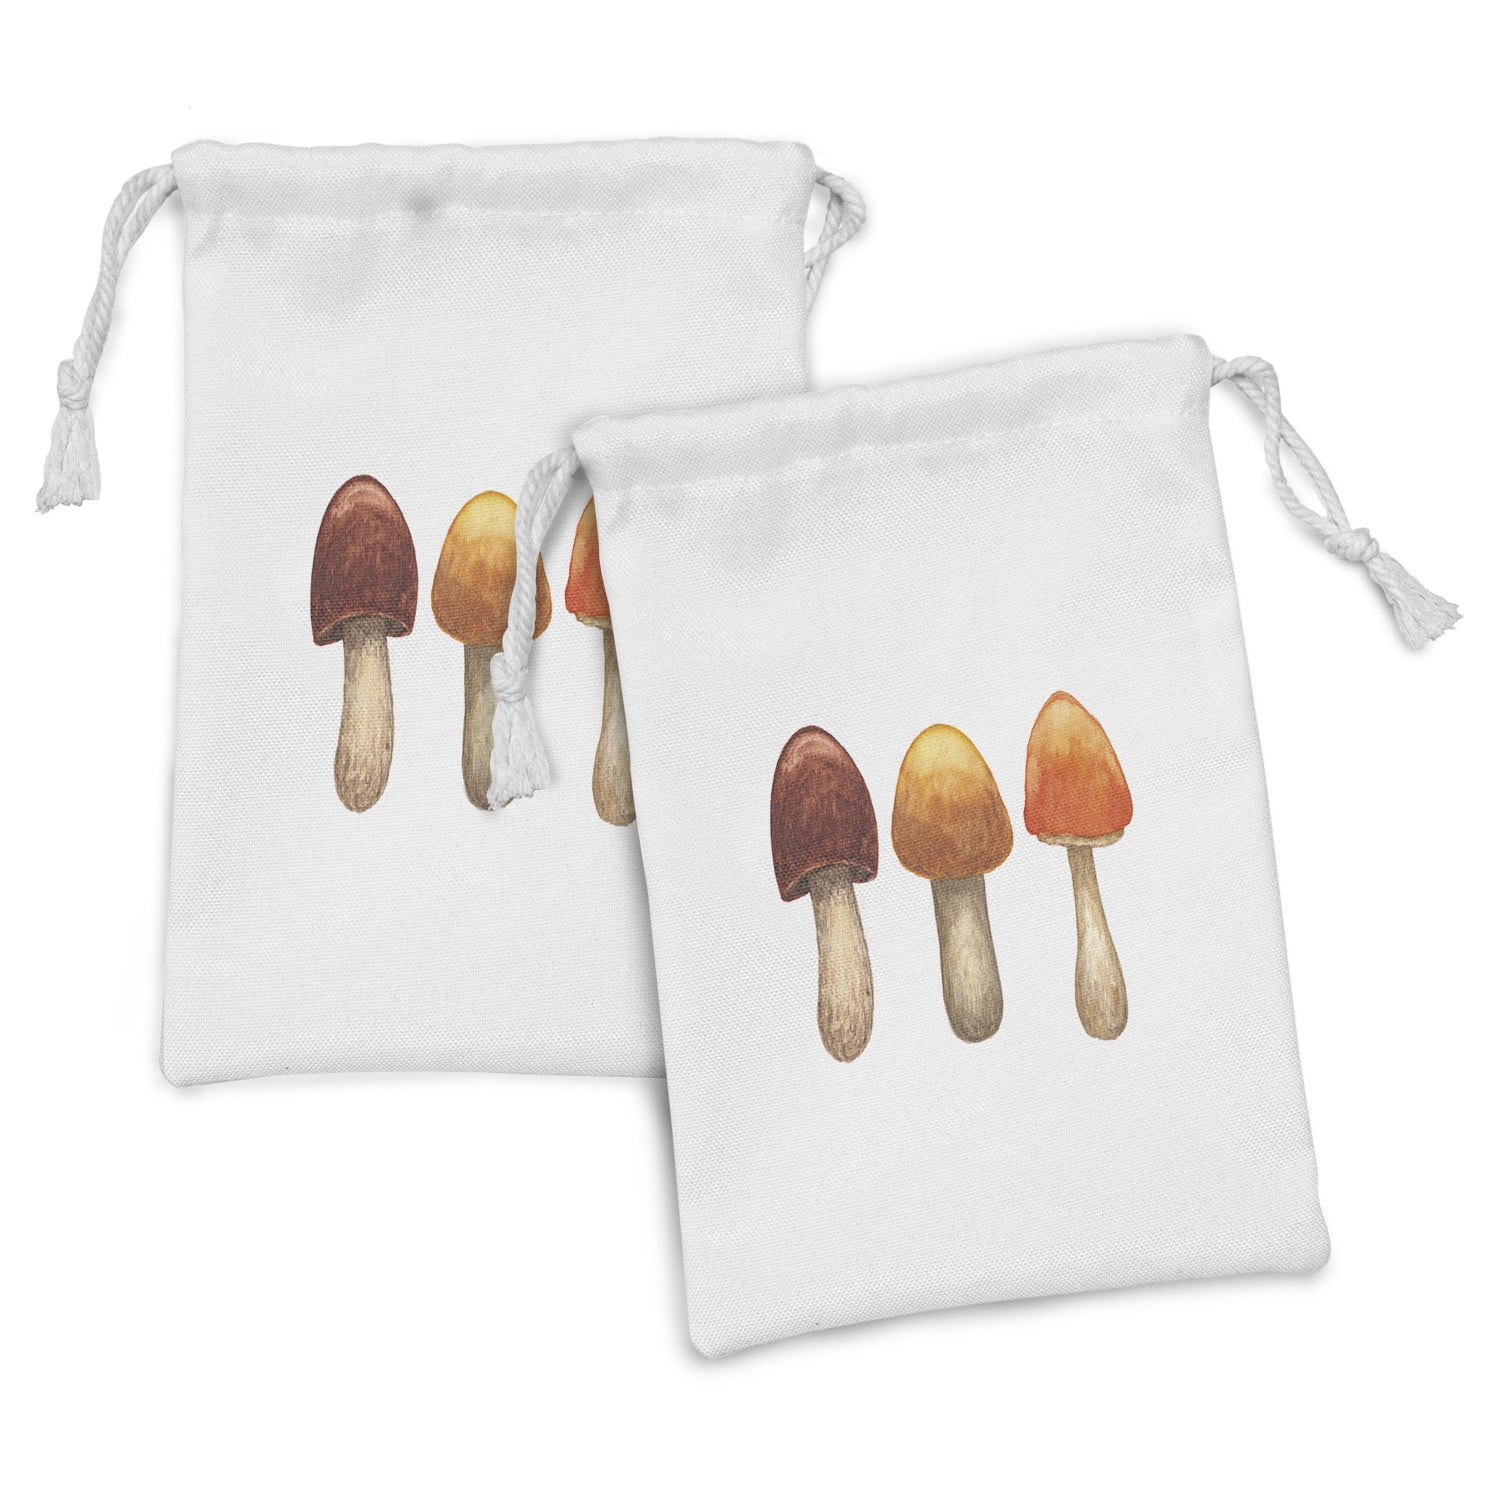 Drawstring Backpack Mushroom Colorful Bags